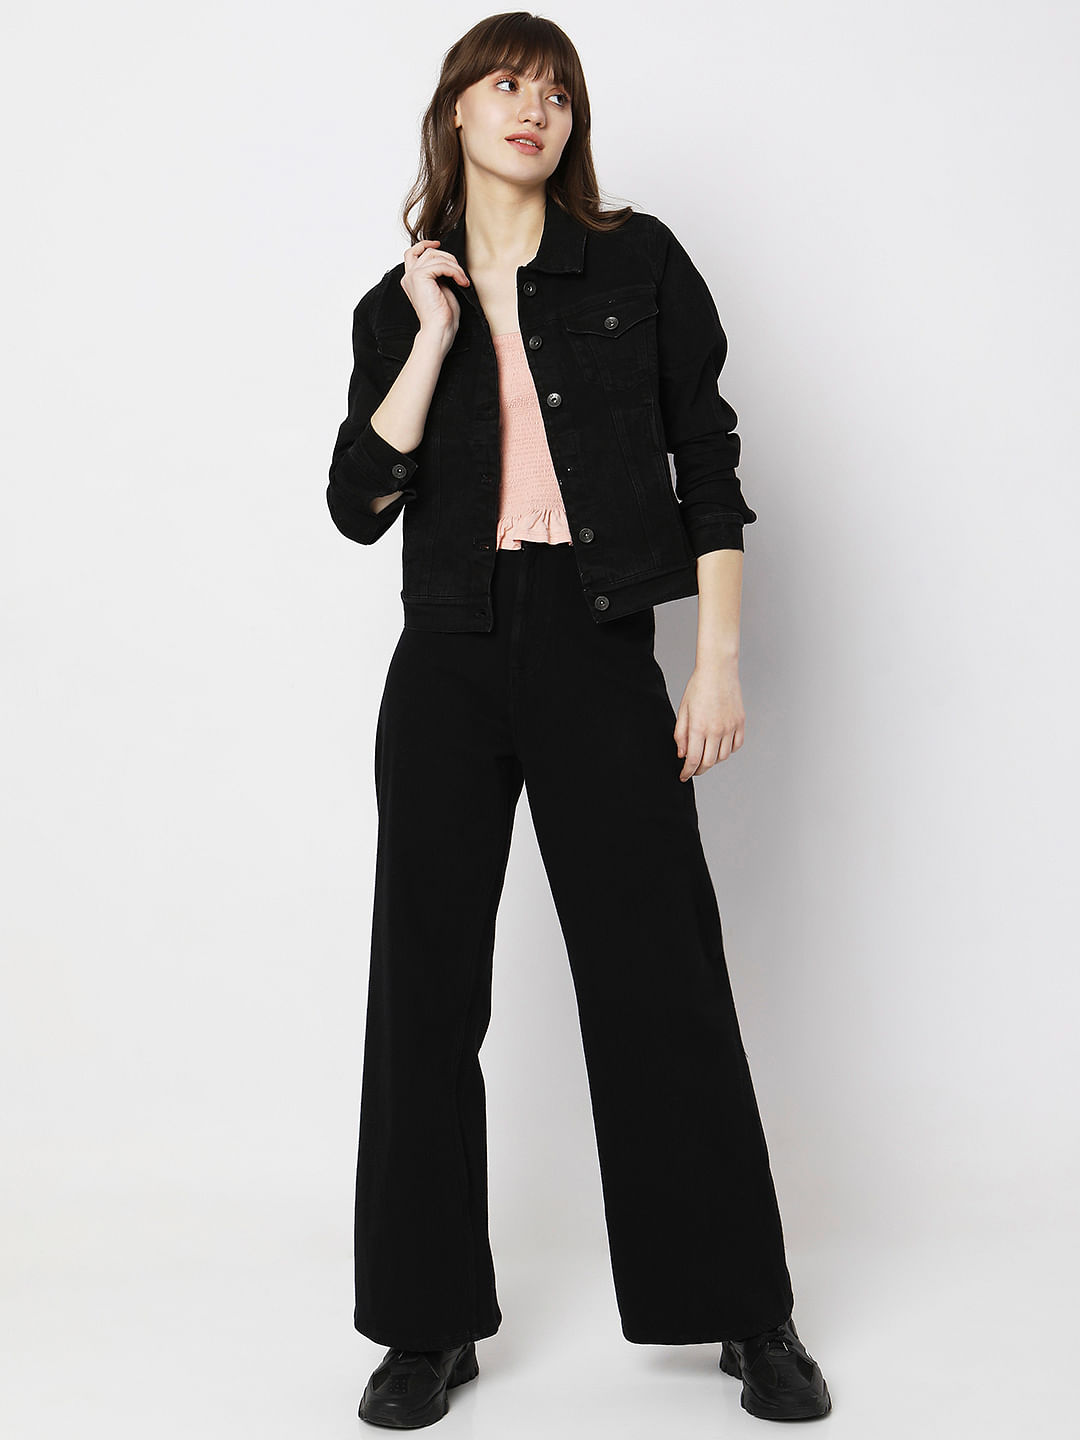 Zara Black Faded Button Up Cropped Denim Jacket Women039s Size S  eBay